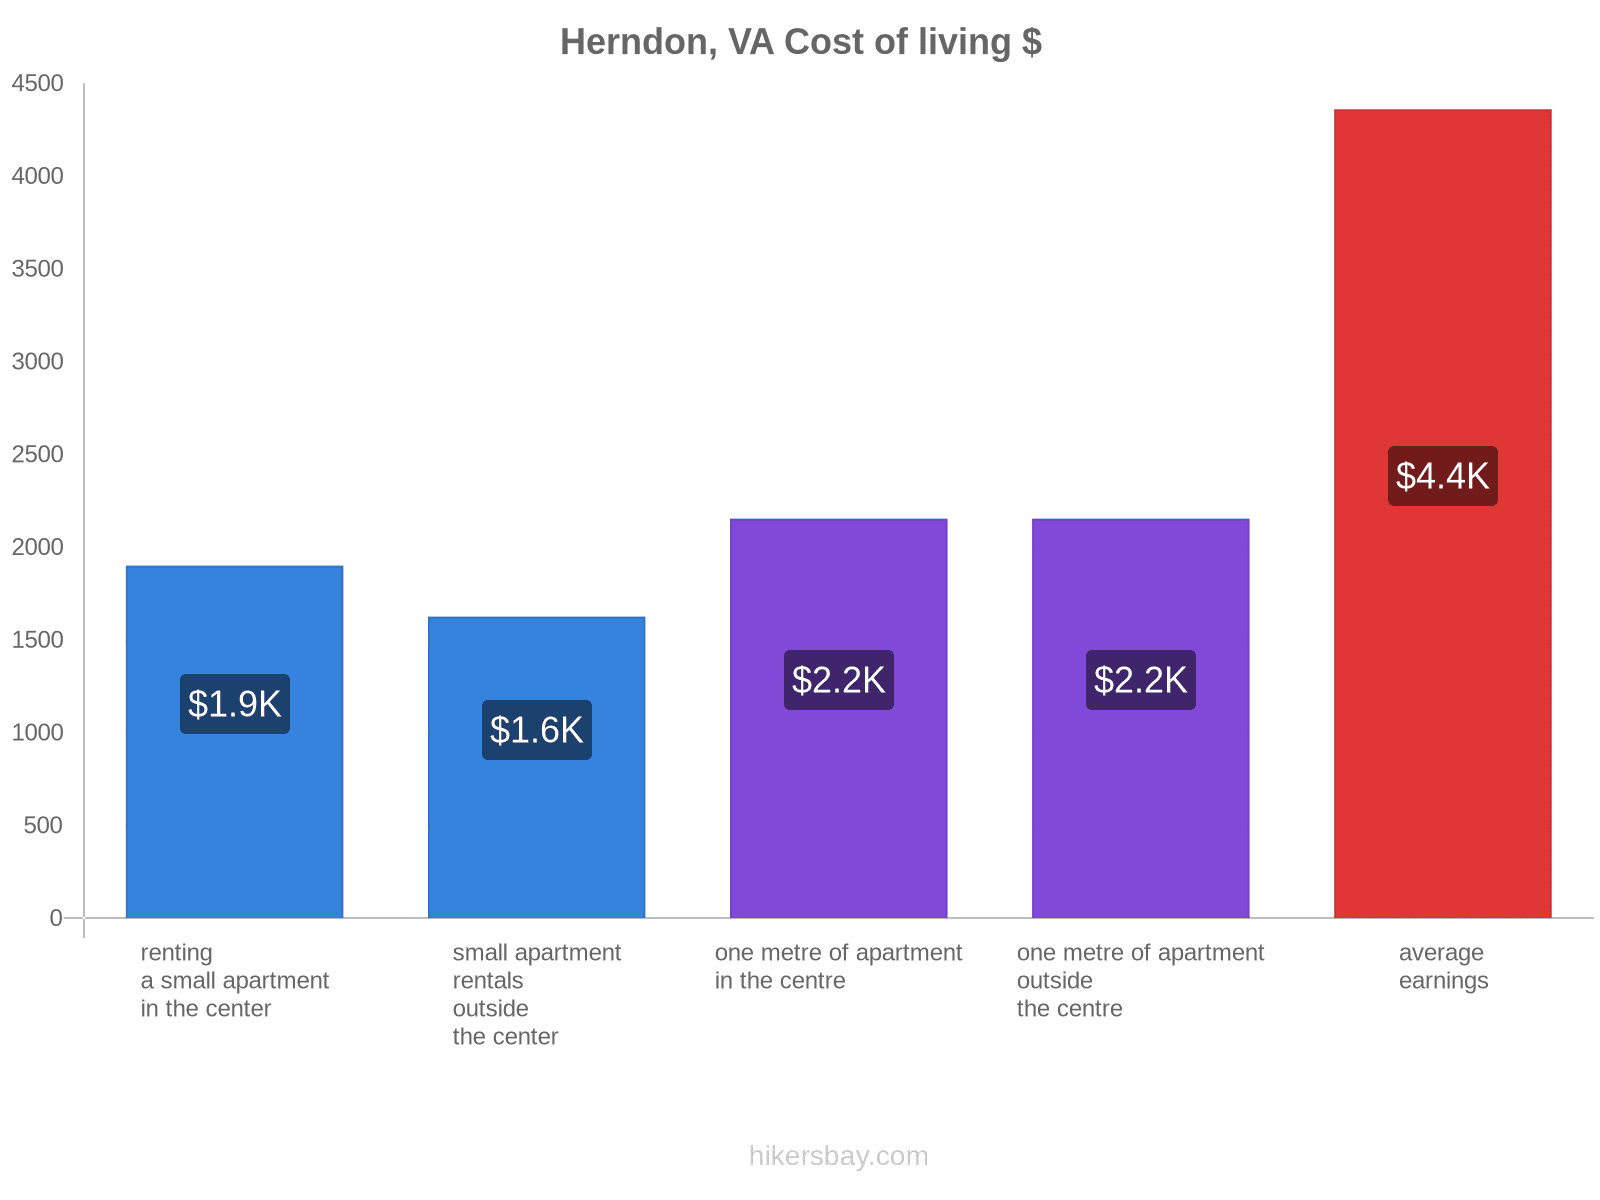 Herndon, VA cost of living hikersbay.com